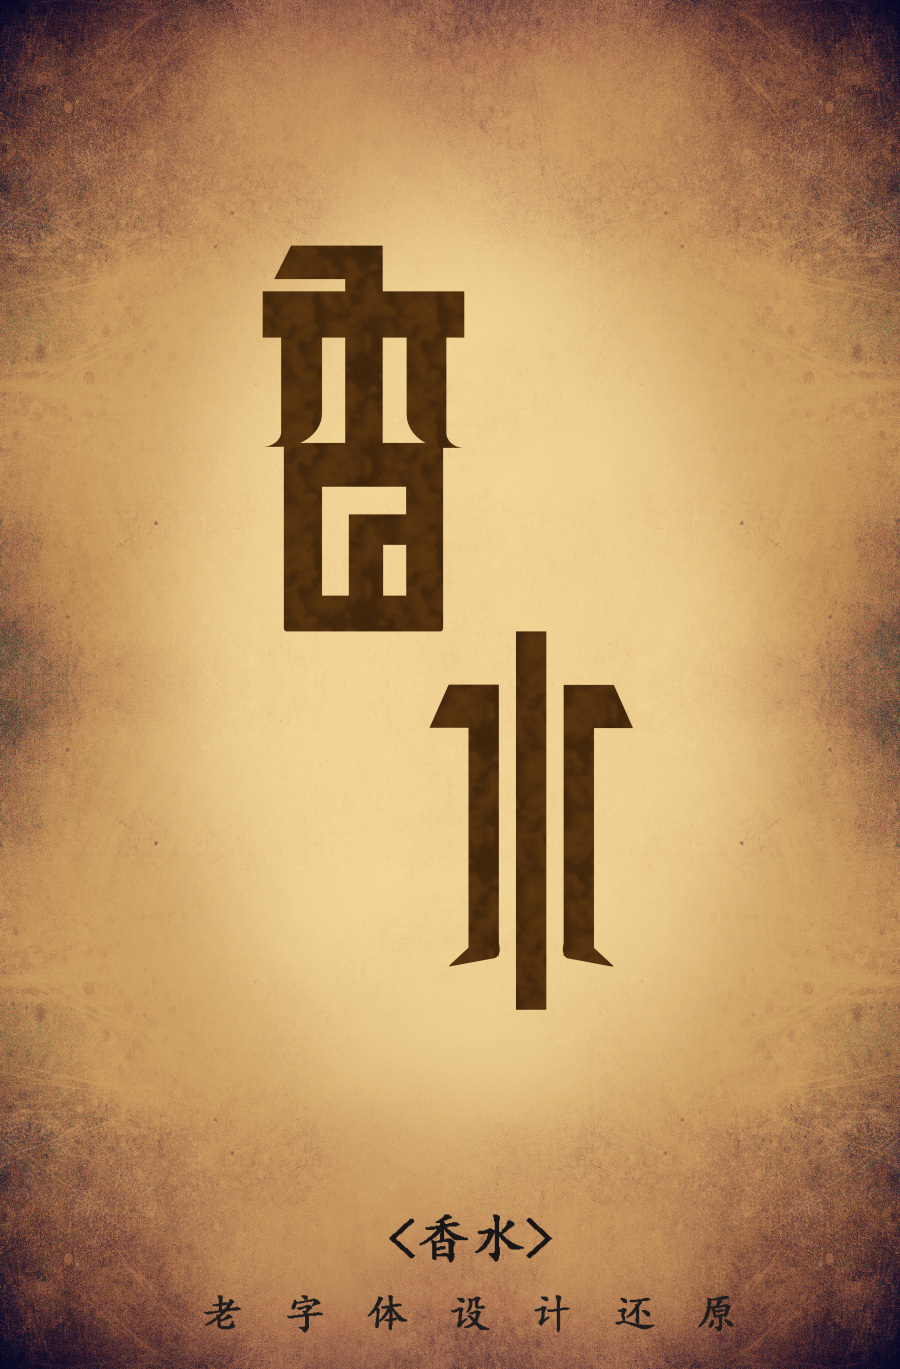 155+ Excellent Chinese font design work set